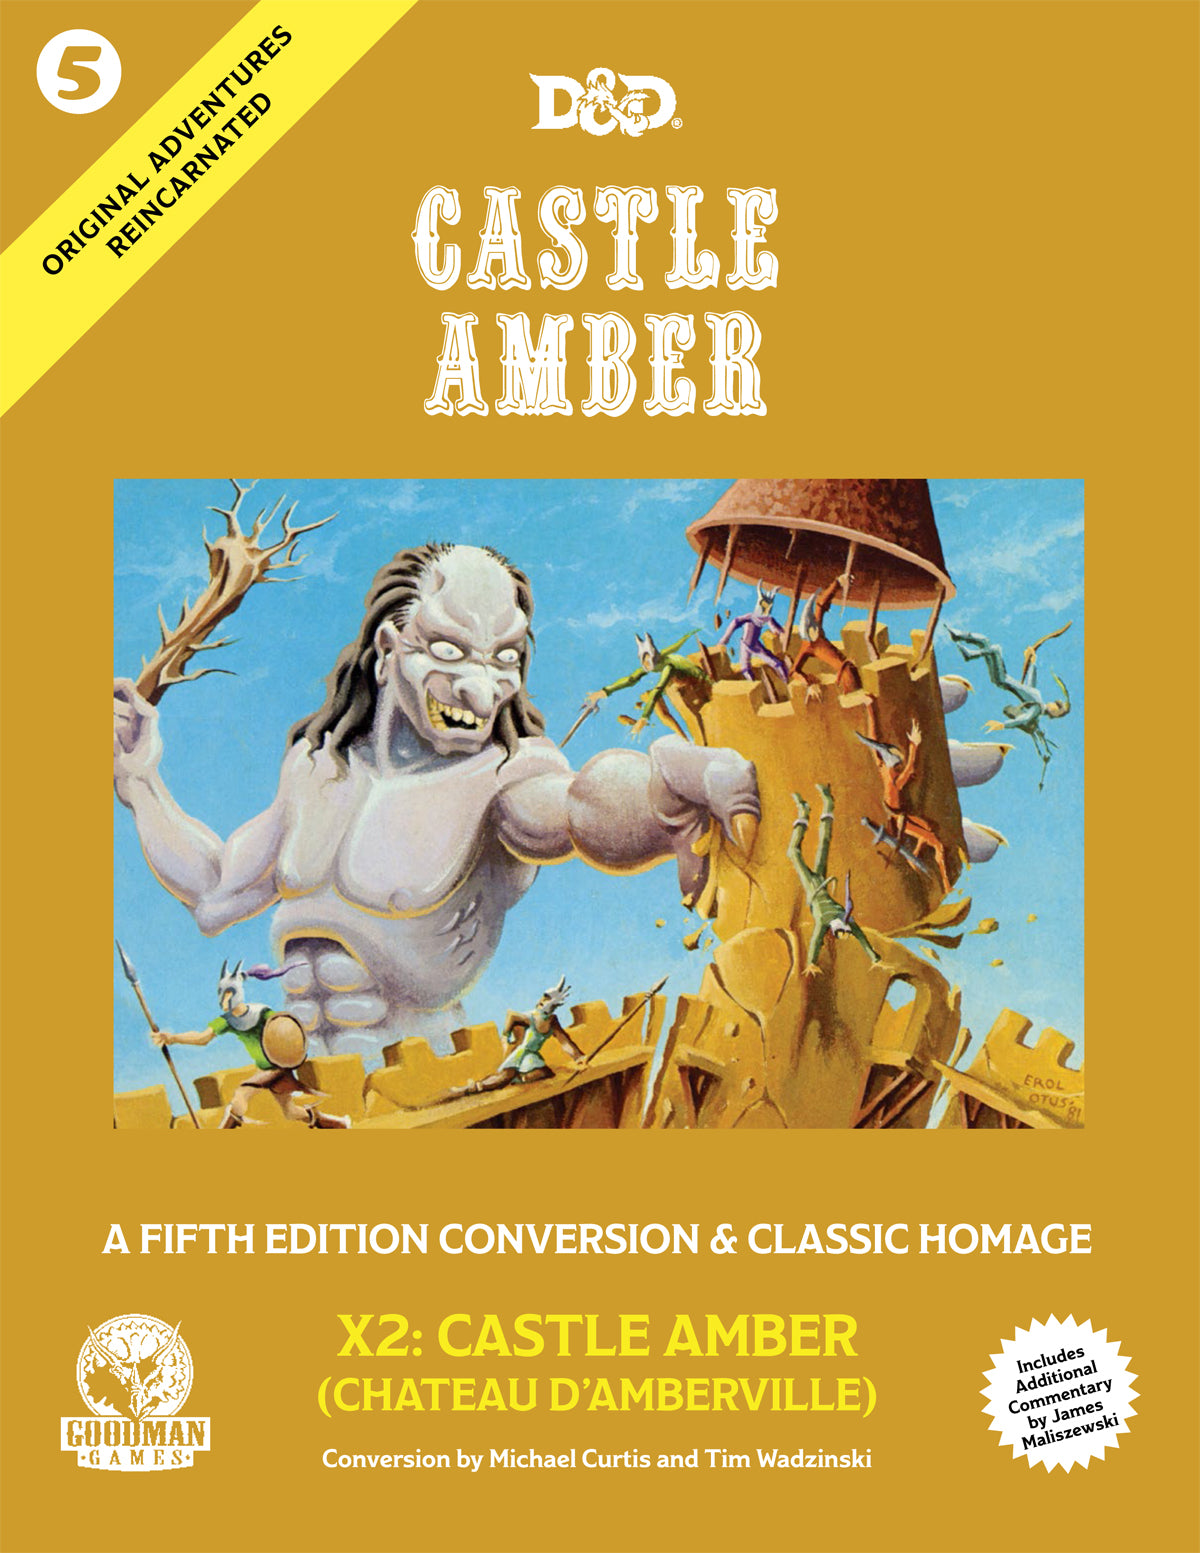 D&D RPG: Original Adventures Reincarnated #5: Castle Amber